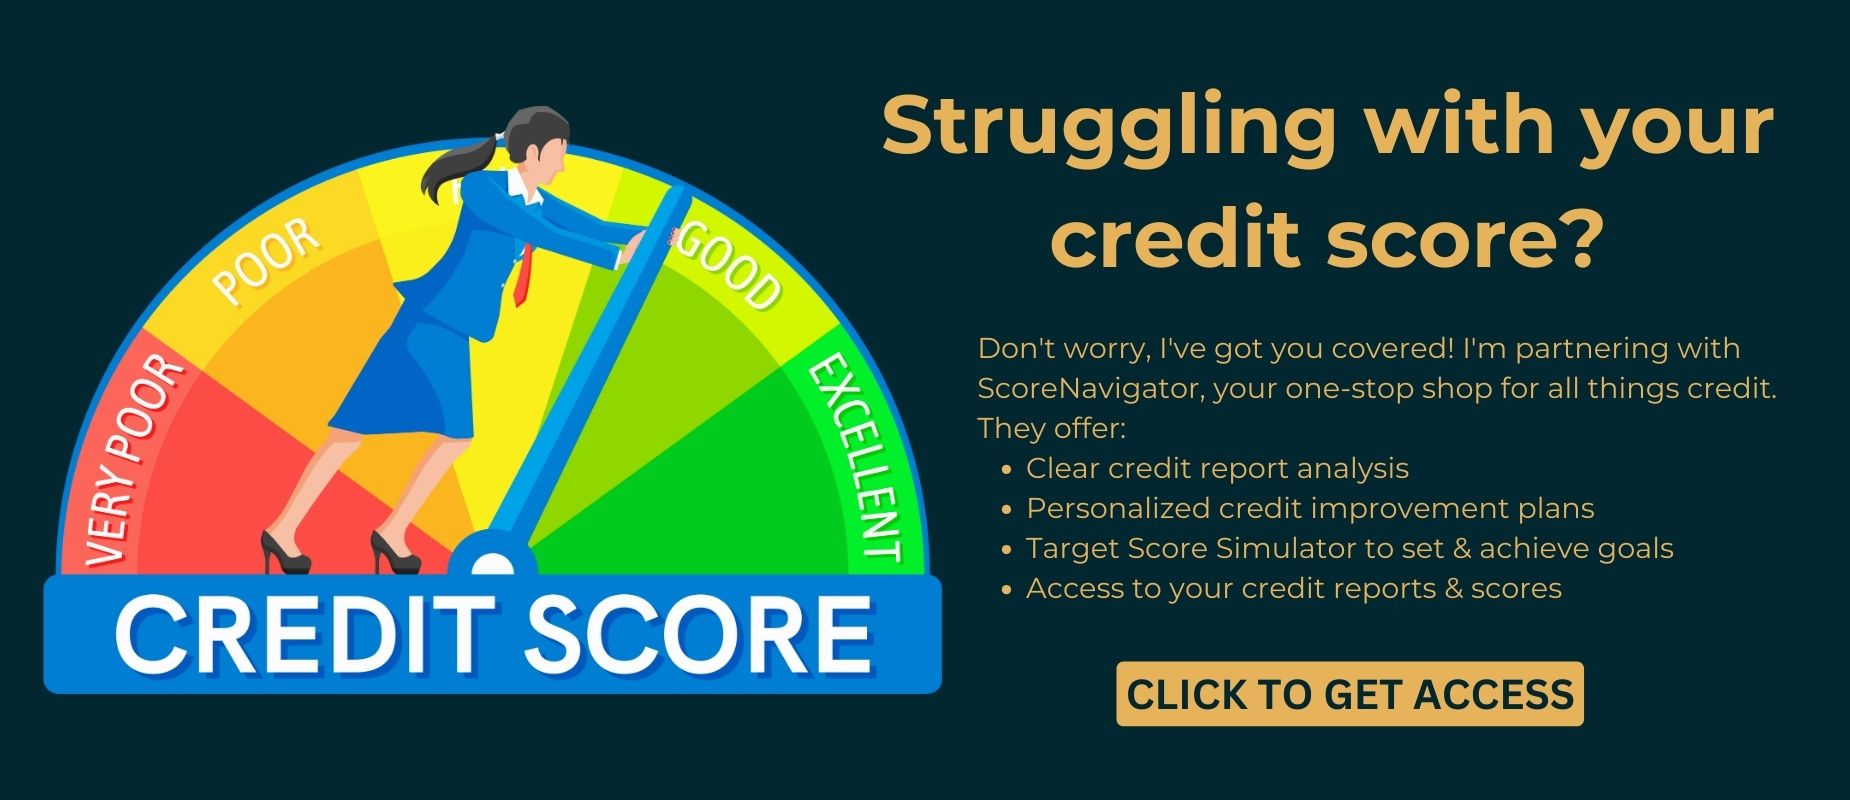 bad credit score